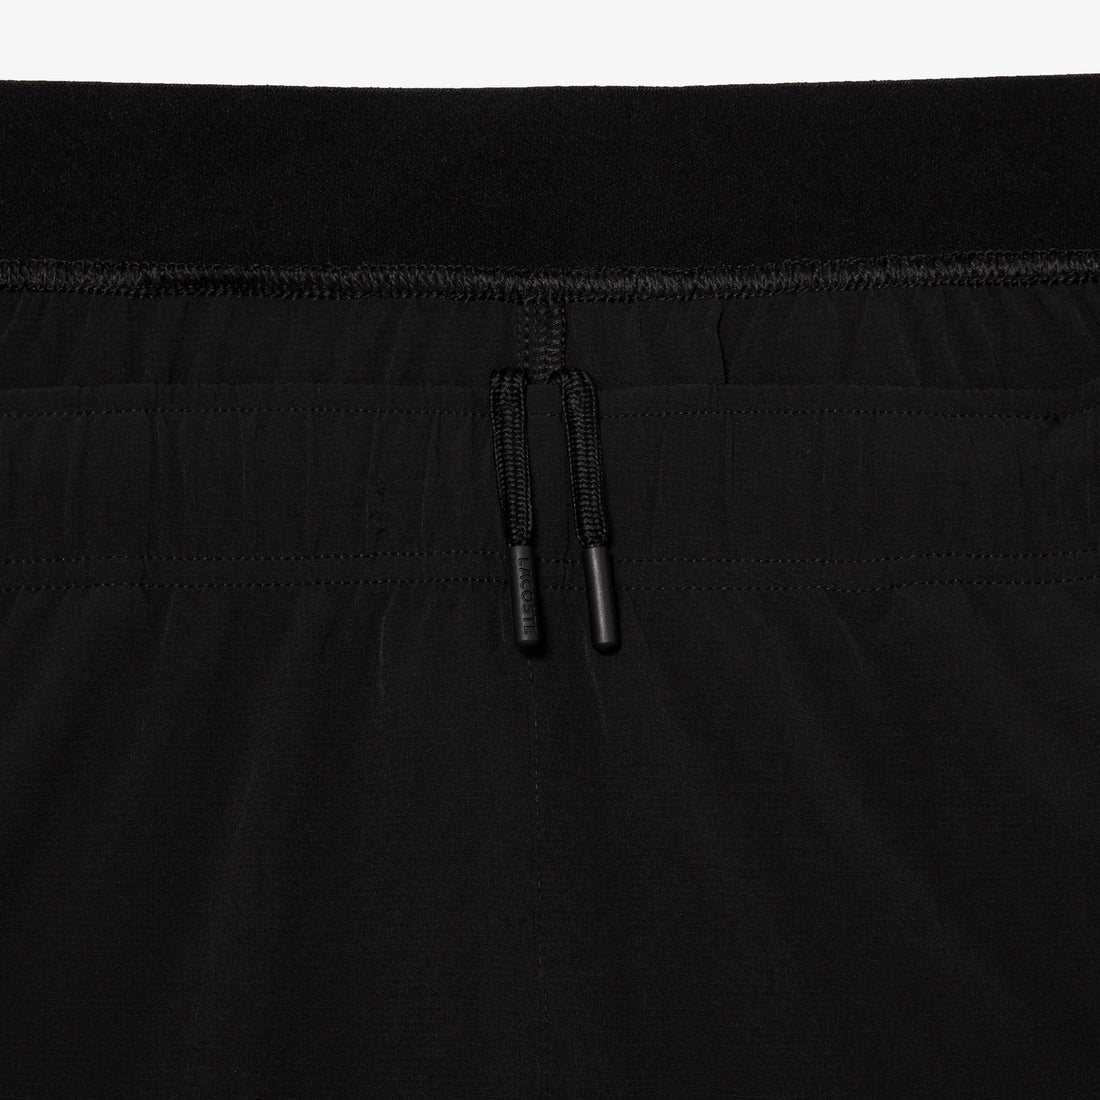 Lacoste GH6961-51 Ultra-Light Shorts [Black/White]